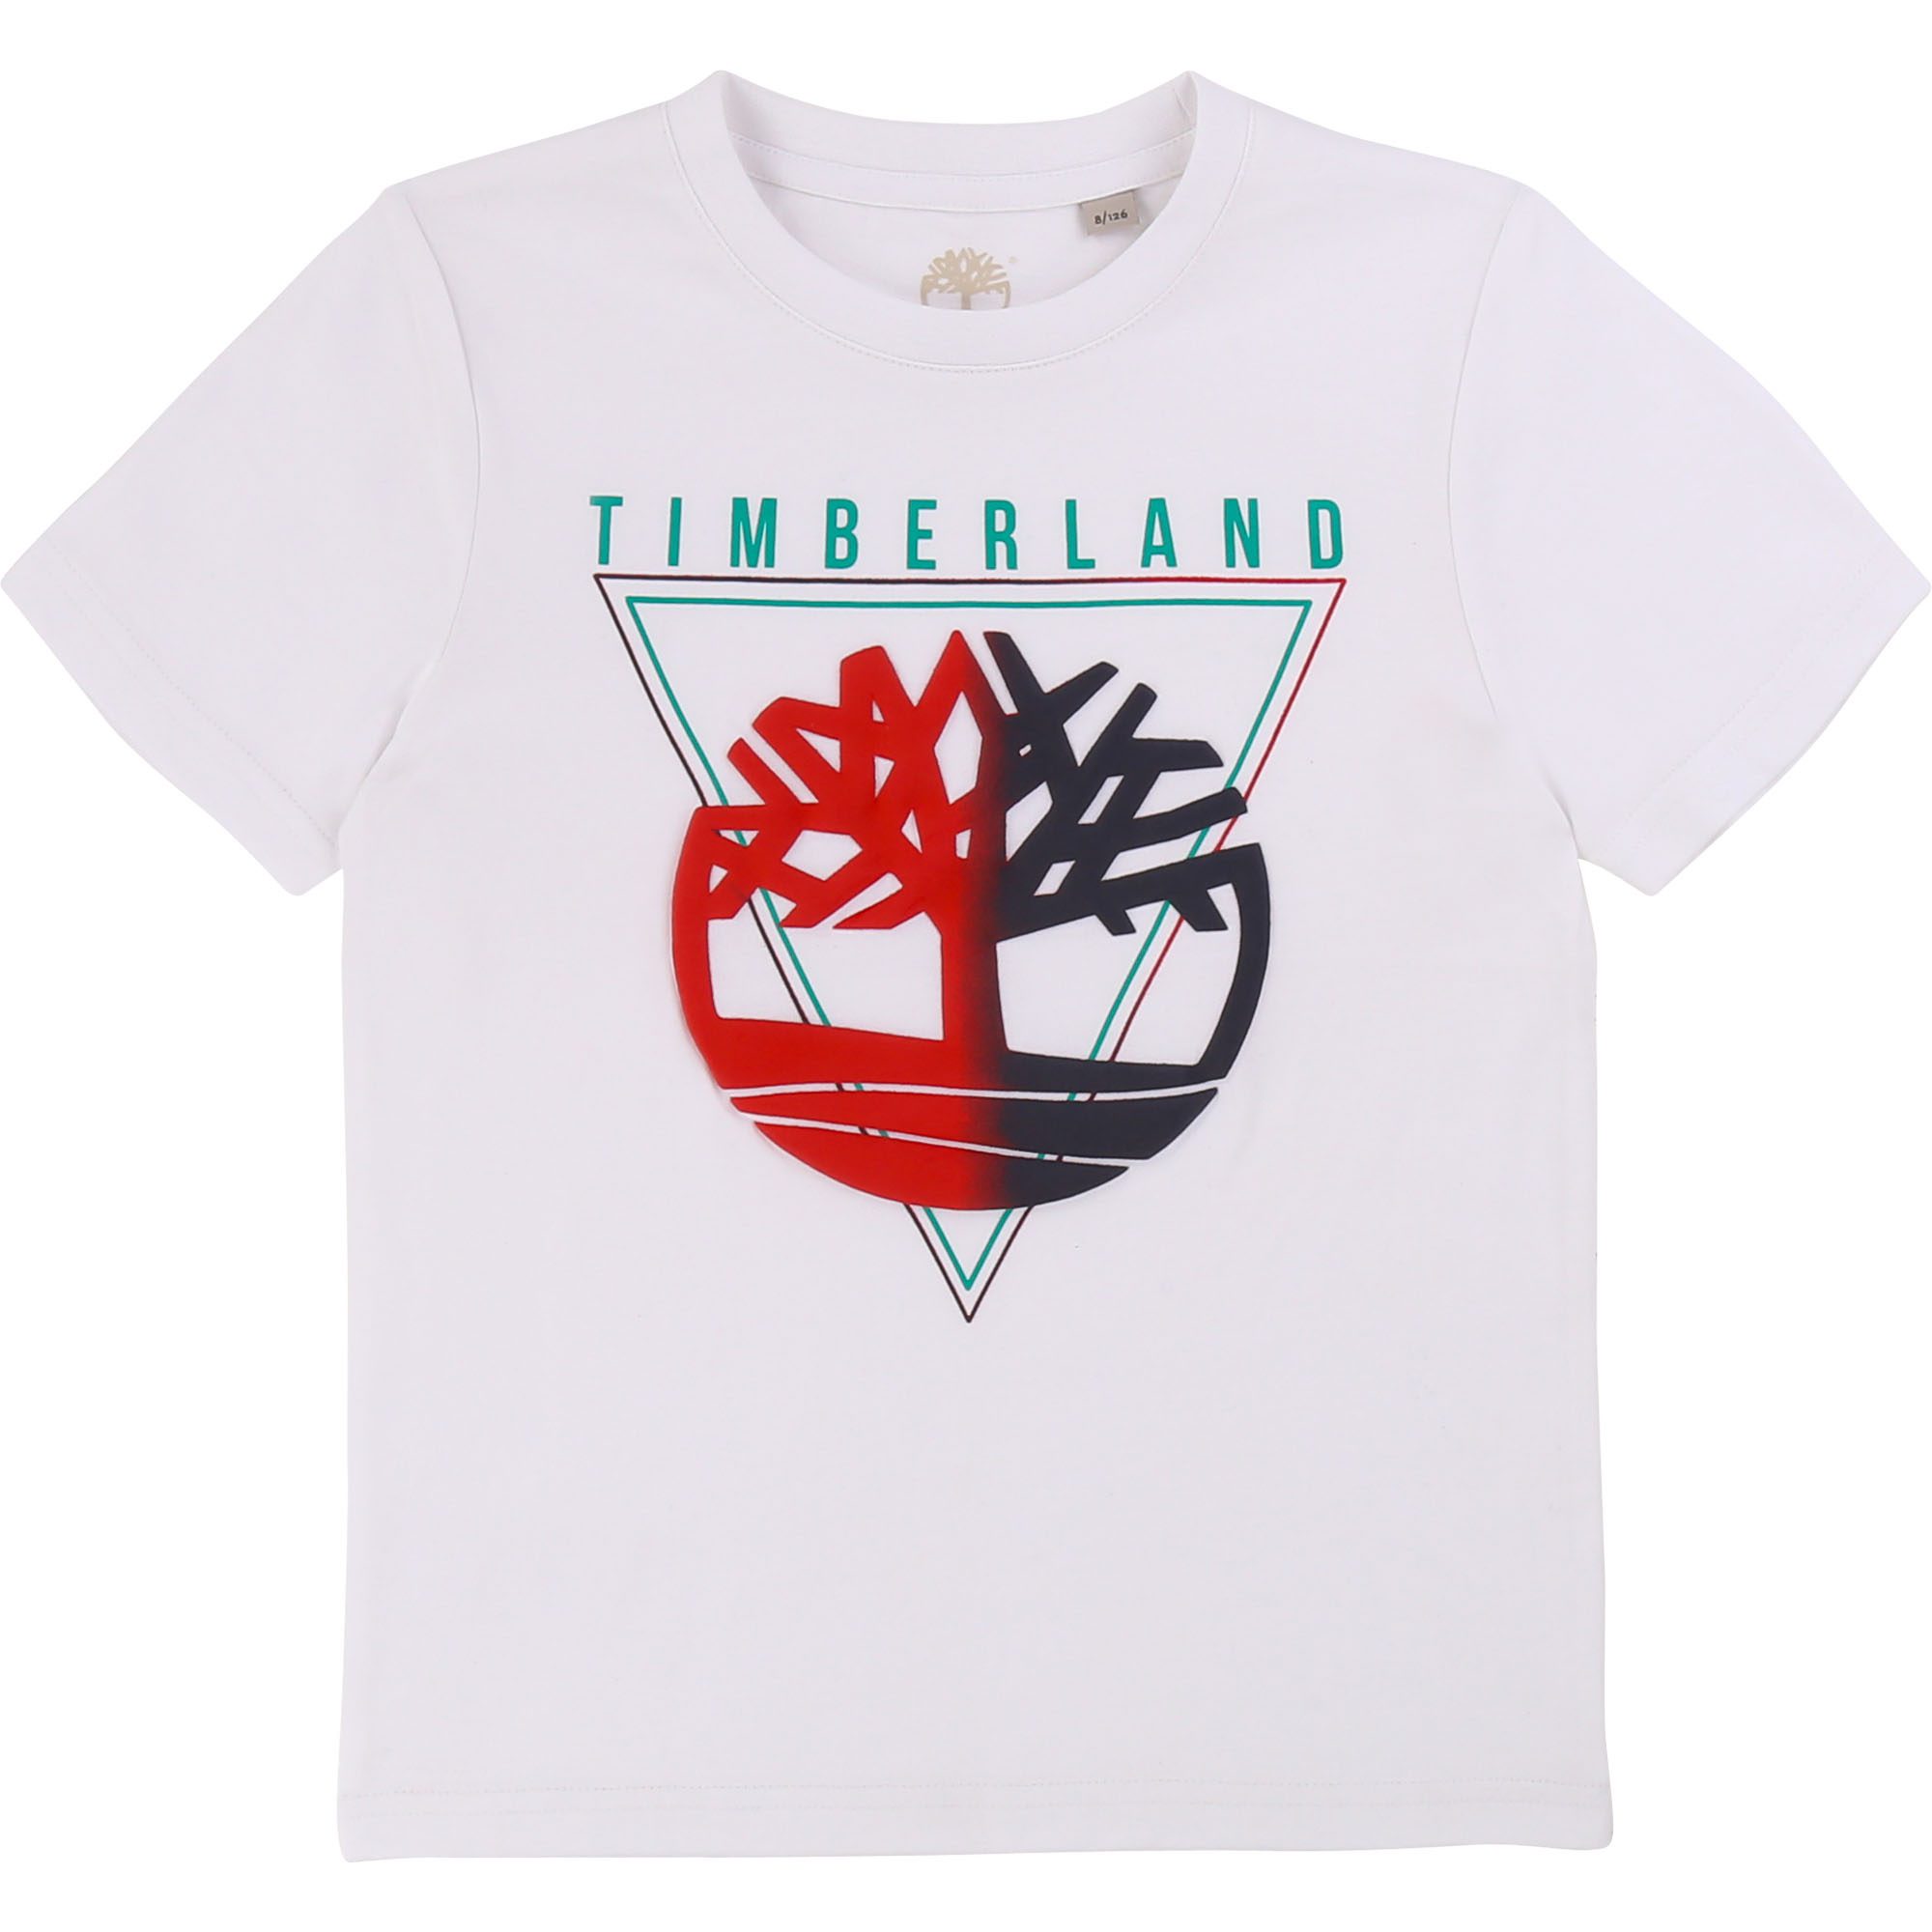 TIMBERLAND White T-Shirt T25Q65 - Little Angels Childrenswear